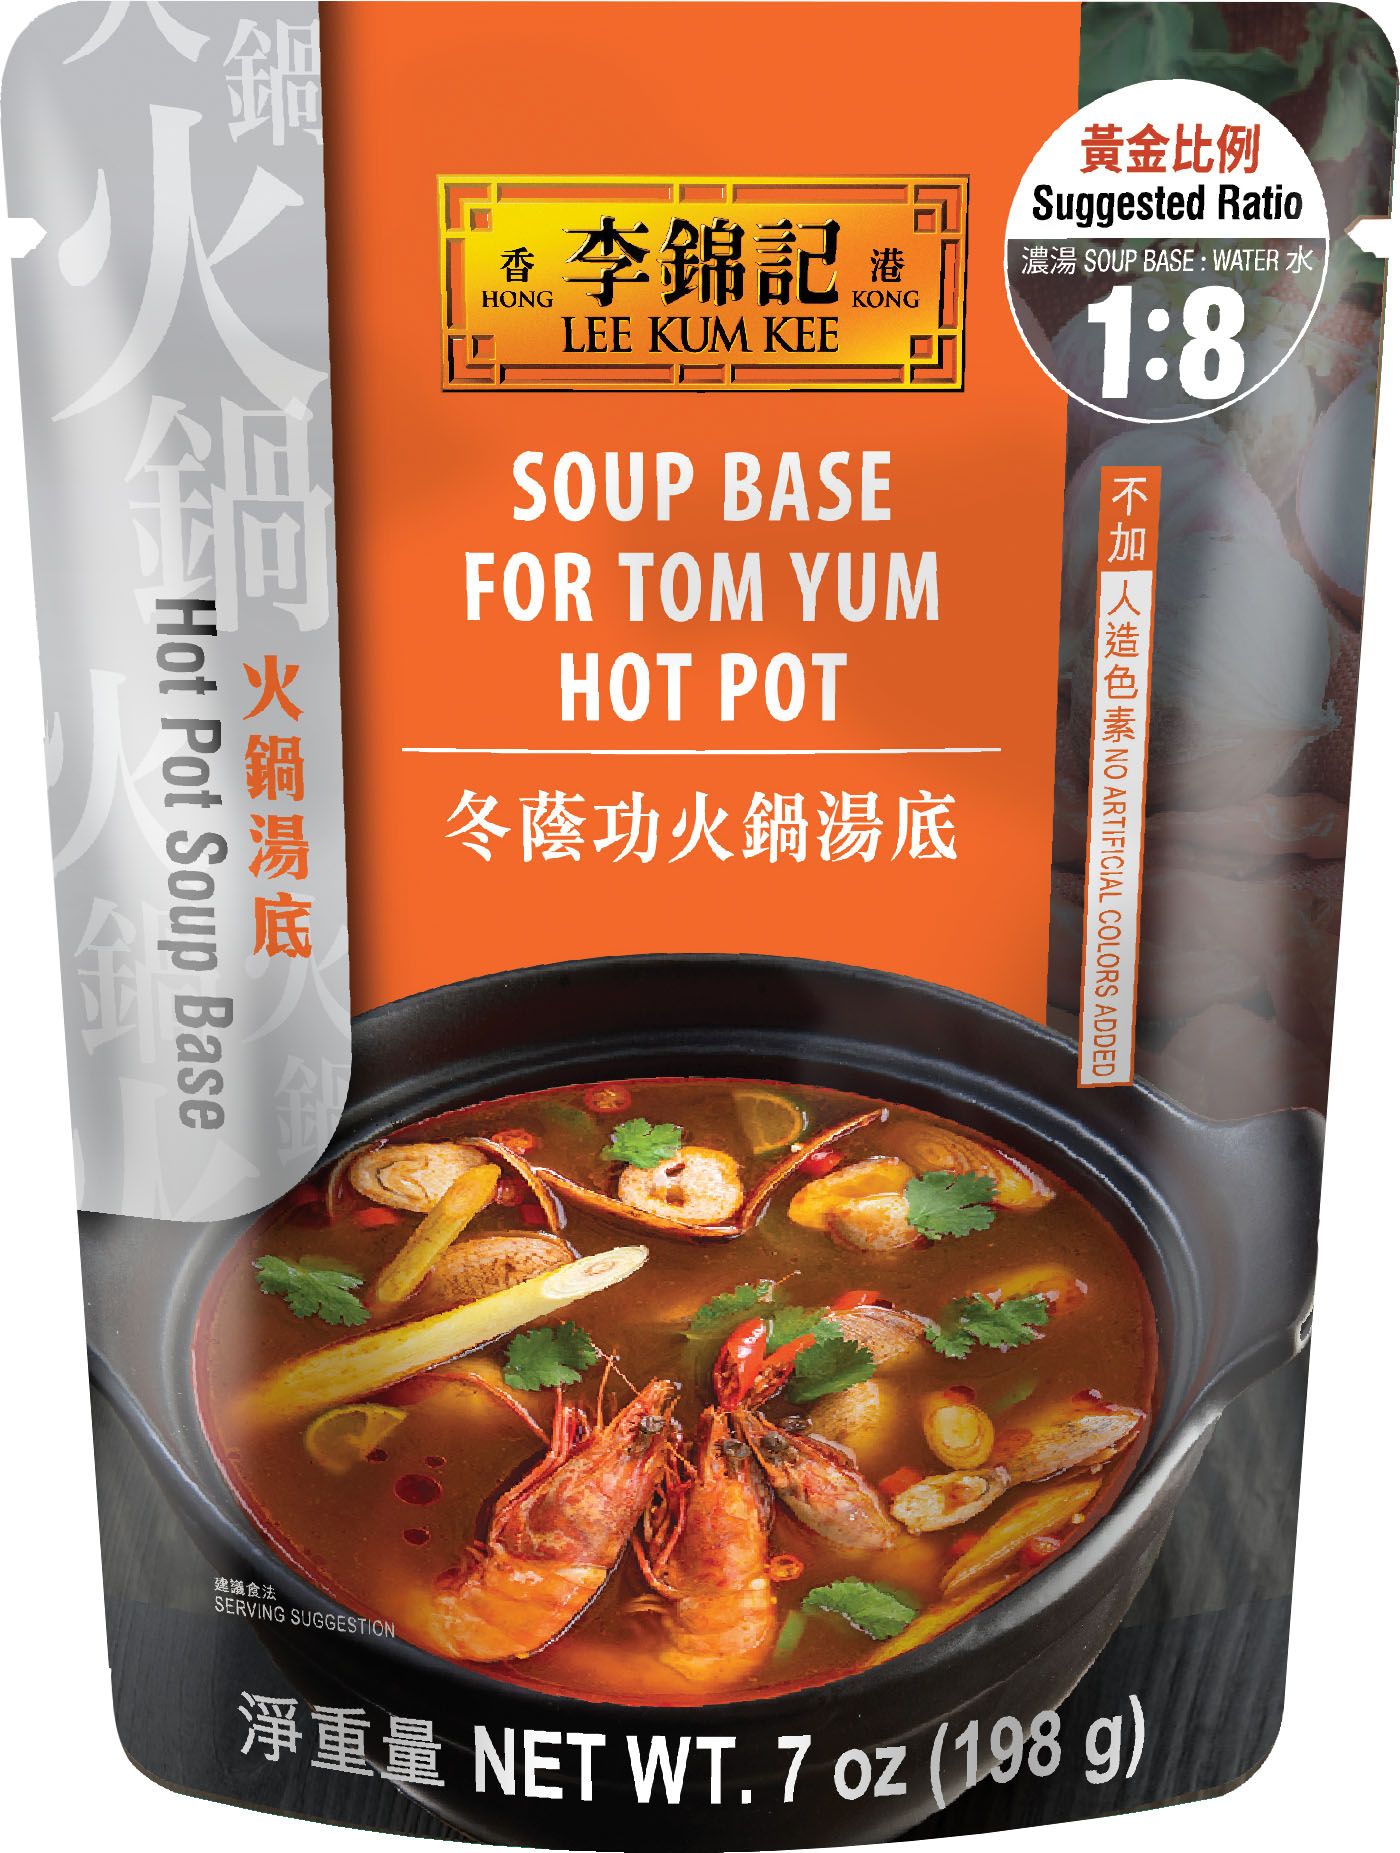 Soup Base for Tom Yum Hot Pot 7 oz (198 g), Soup Pack